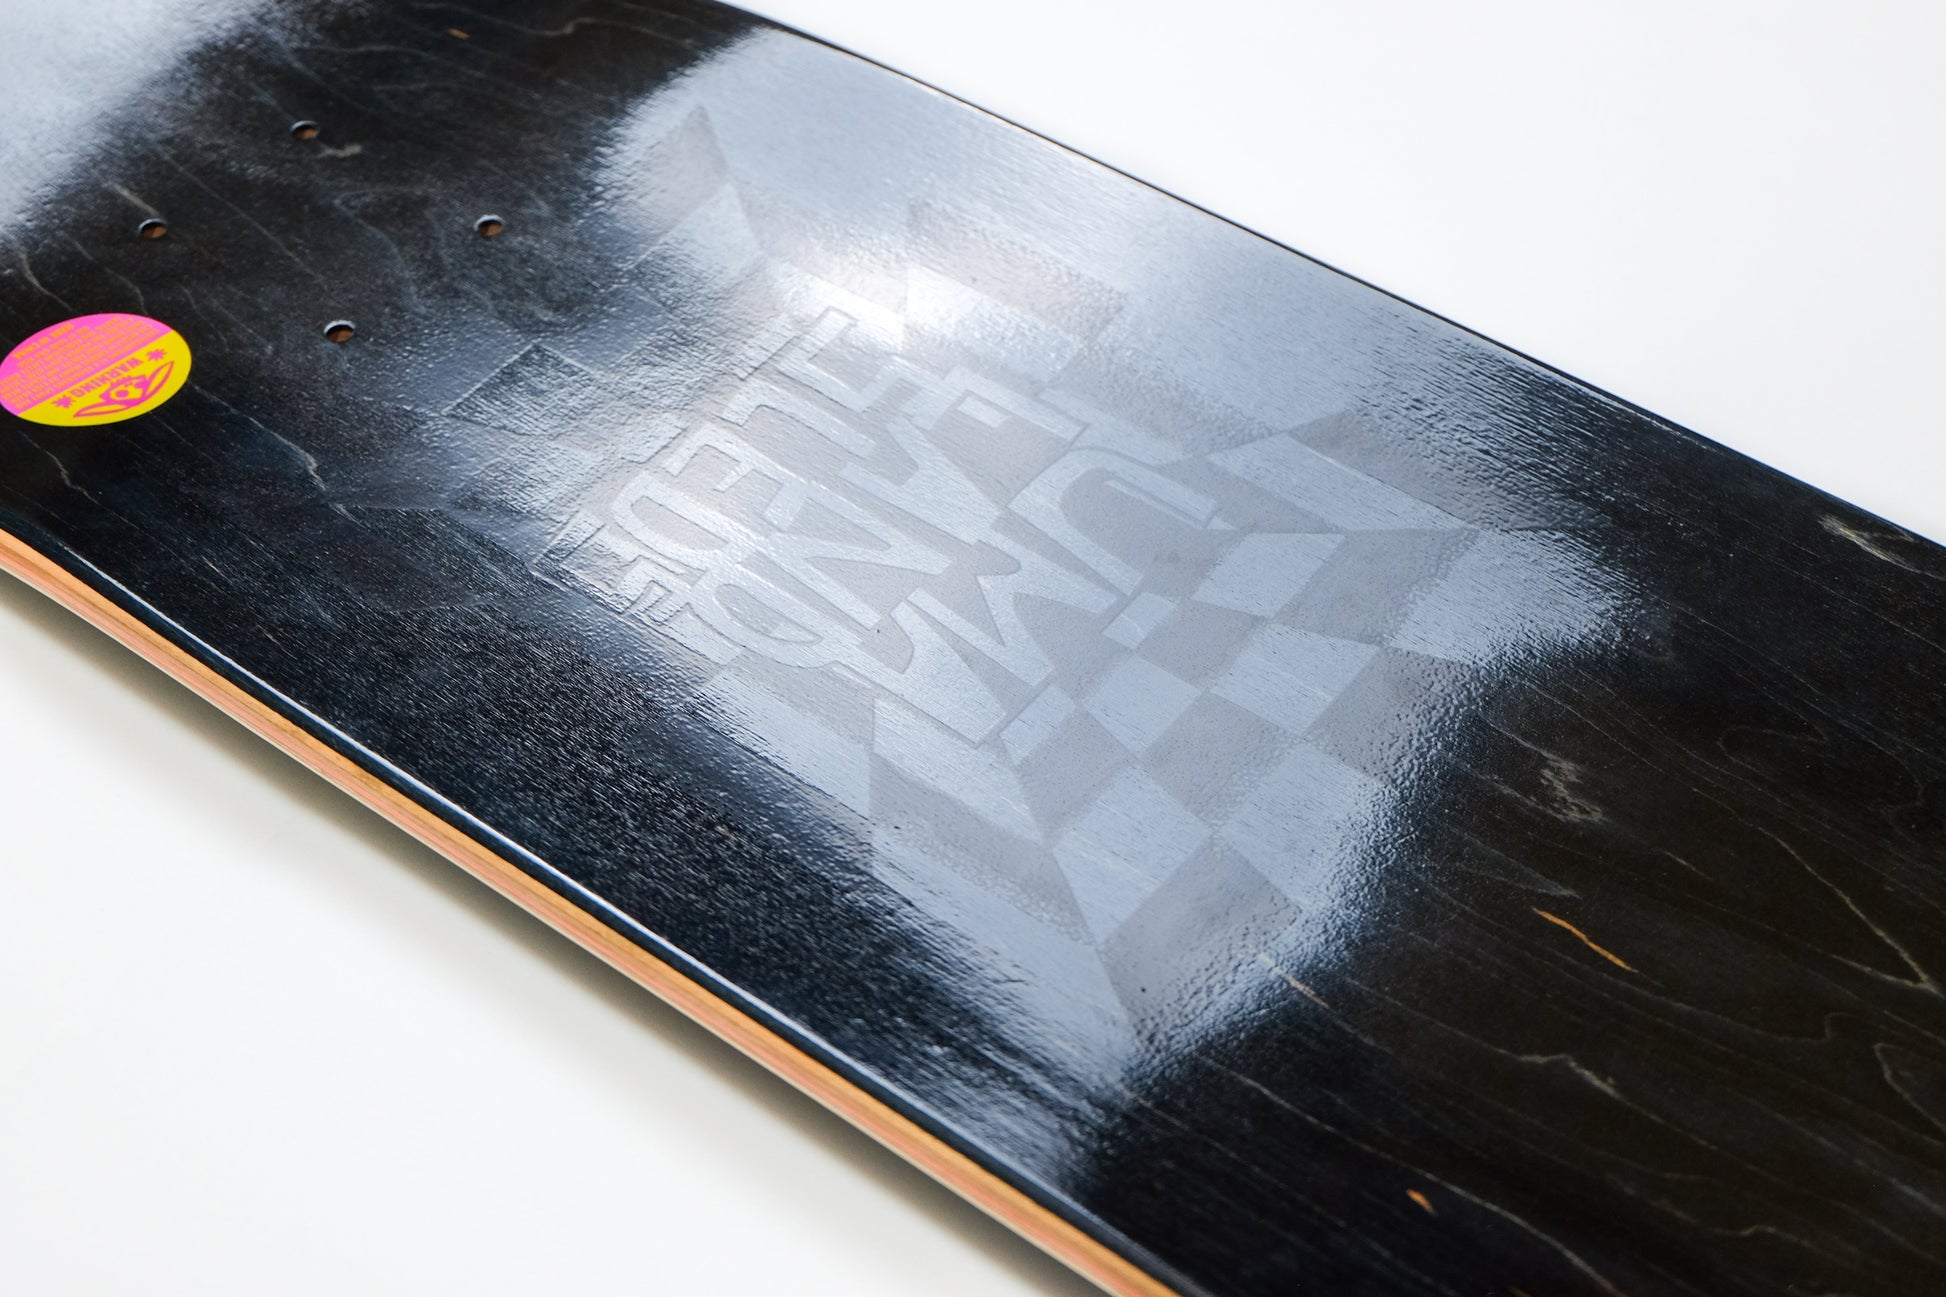 Uma Cody Chapman Realm 8.125" skateboard deck - SkatebruhSG